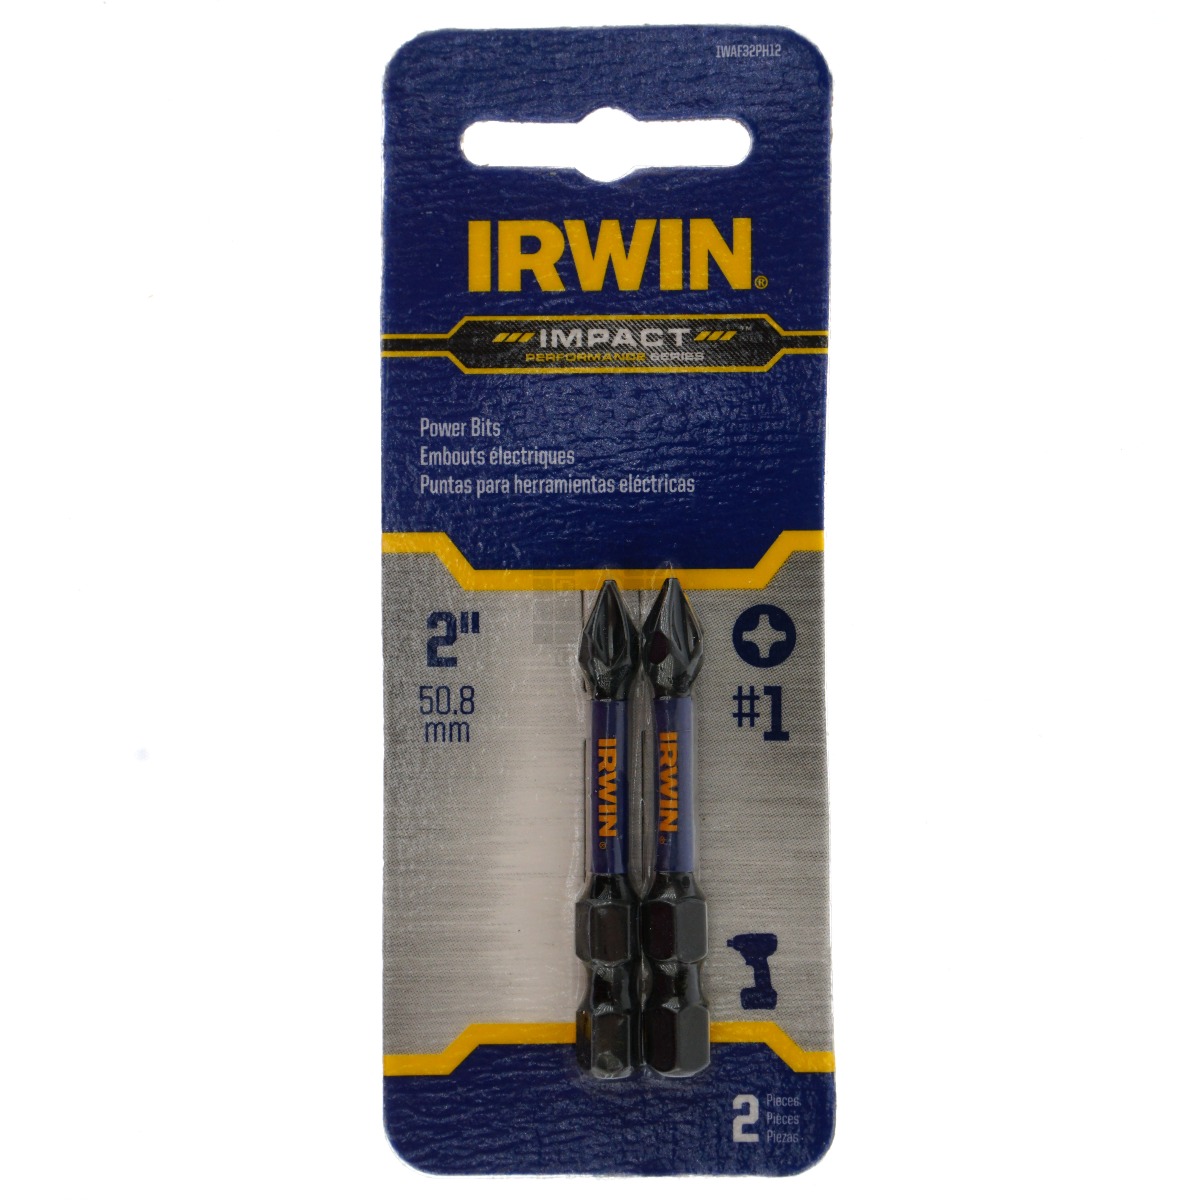 Irwin IWAF32PH12 #1 Phillips Impact Power Bits, 2" Length, 2 Pack